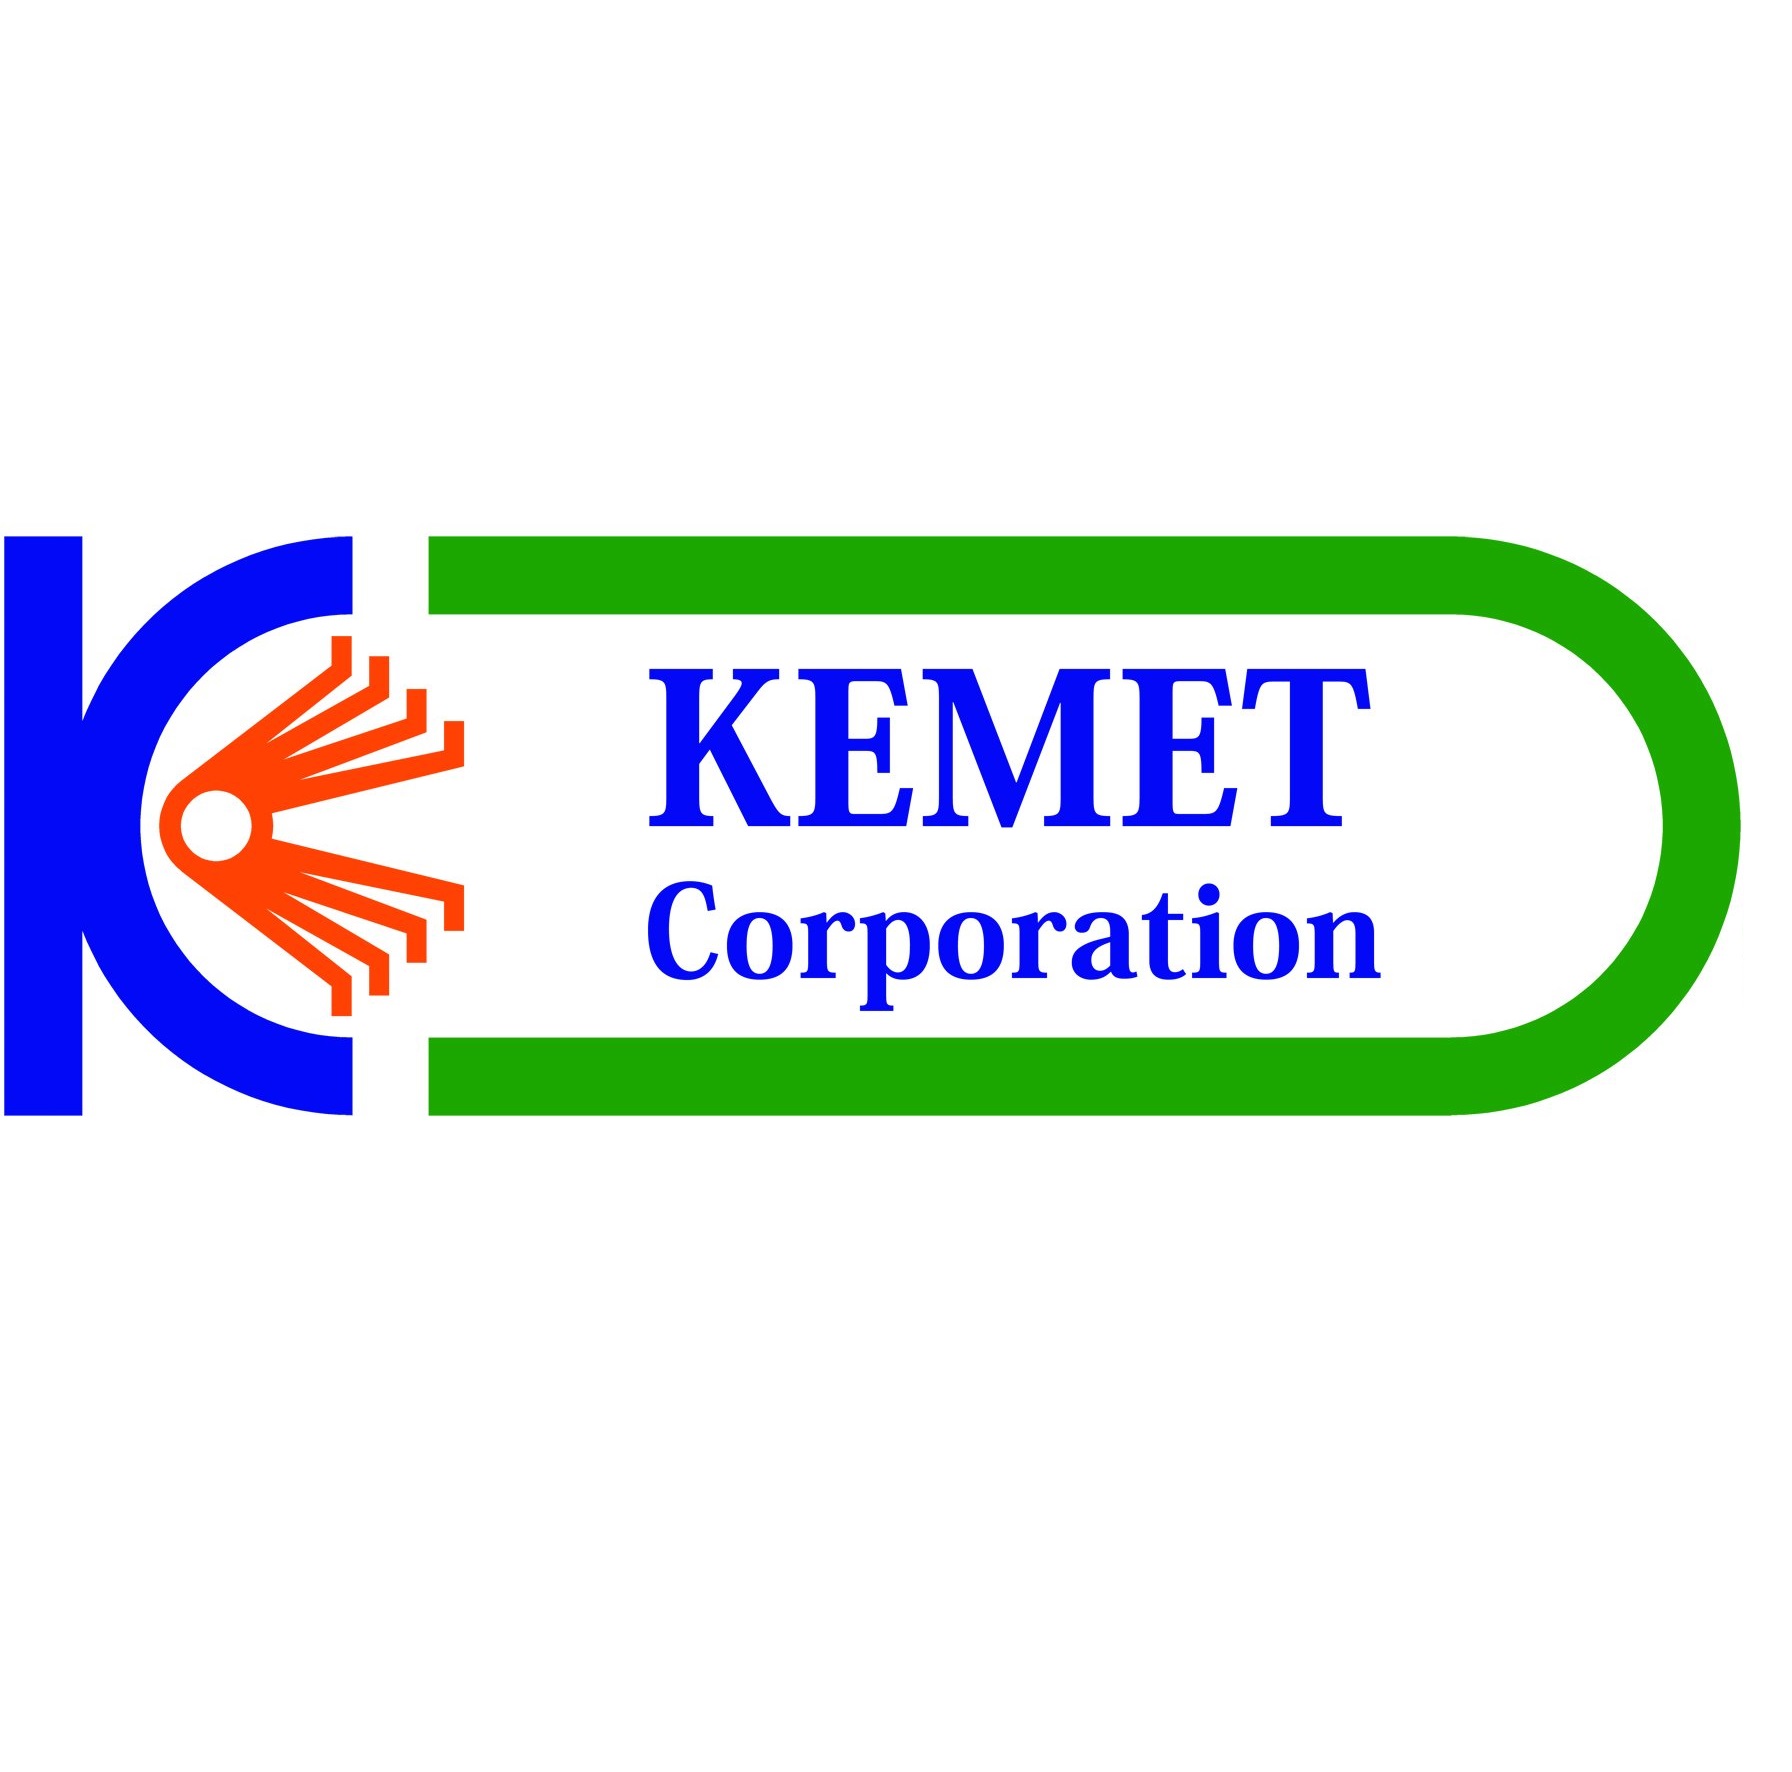 Kemet Corporation for BIM Engineering